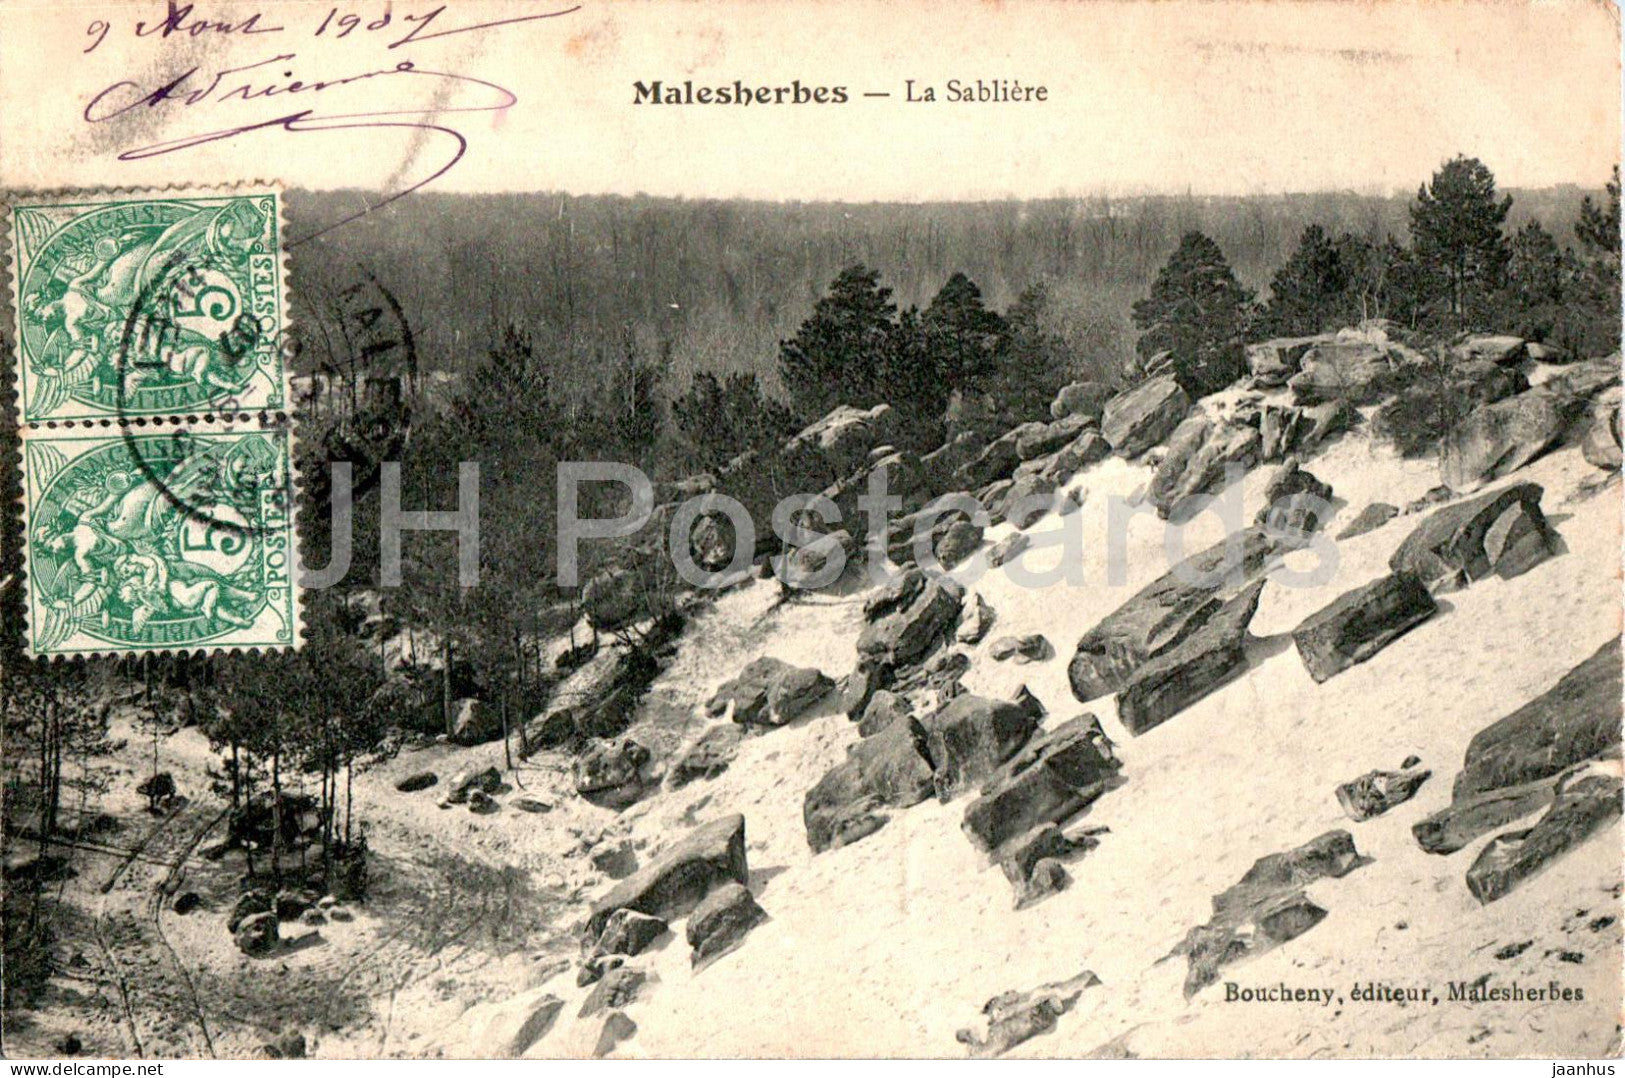 Malesherbes - La Sabliere - old postcard - 1907 - France - used - JH Postcards